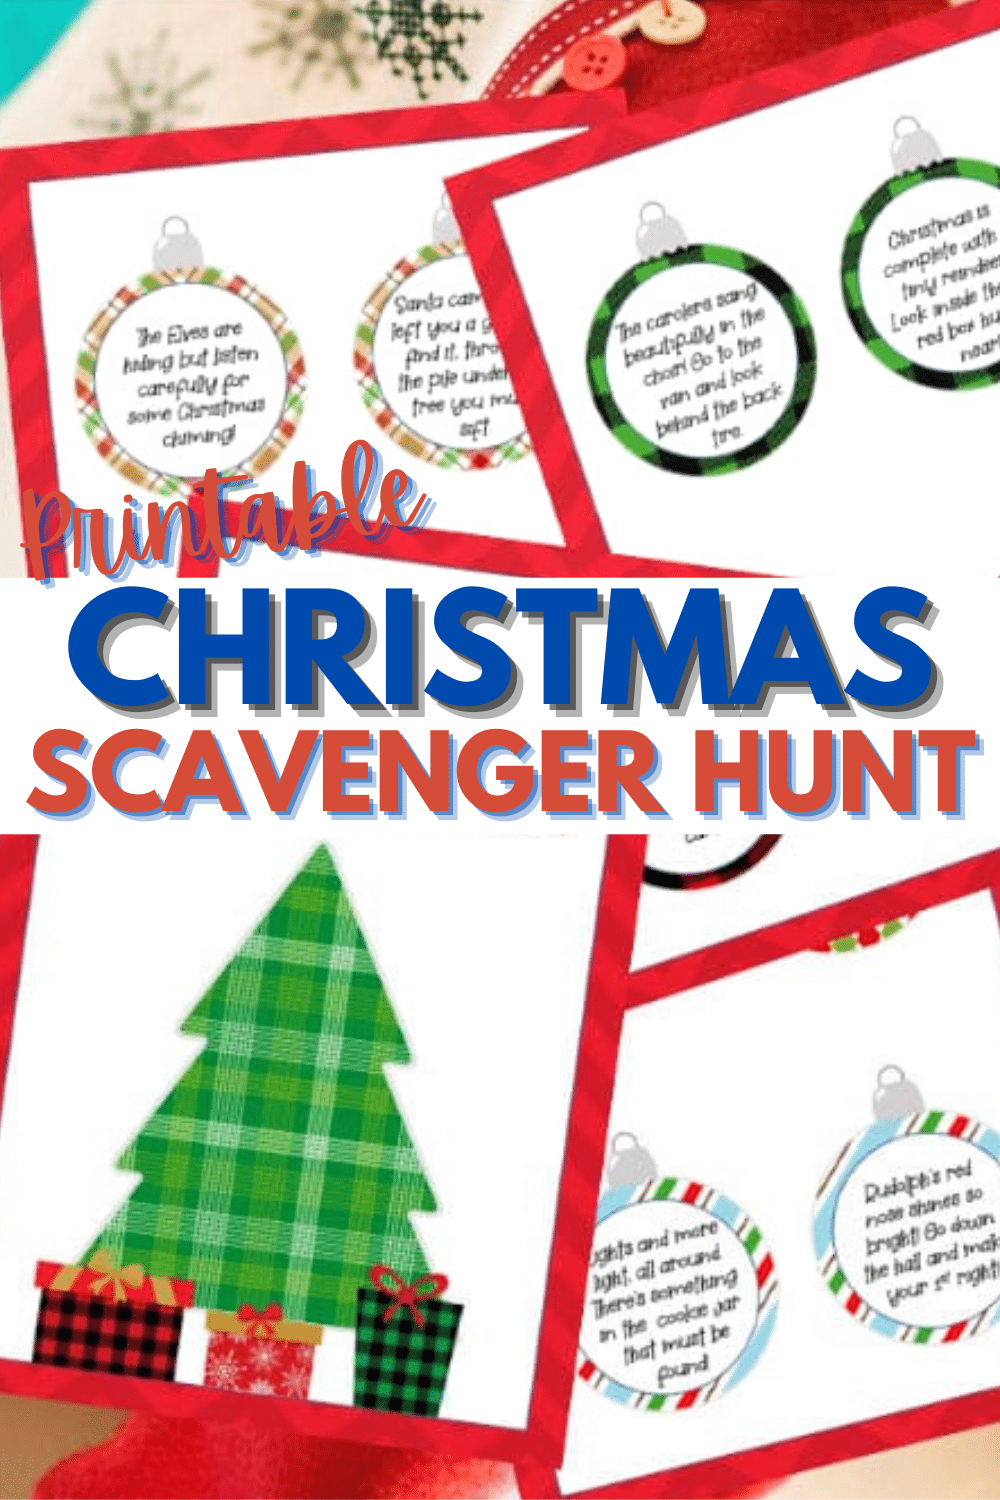 Christmas scavenger suitcase hunt stuffed Christmas Scavenger